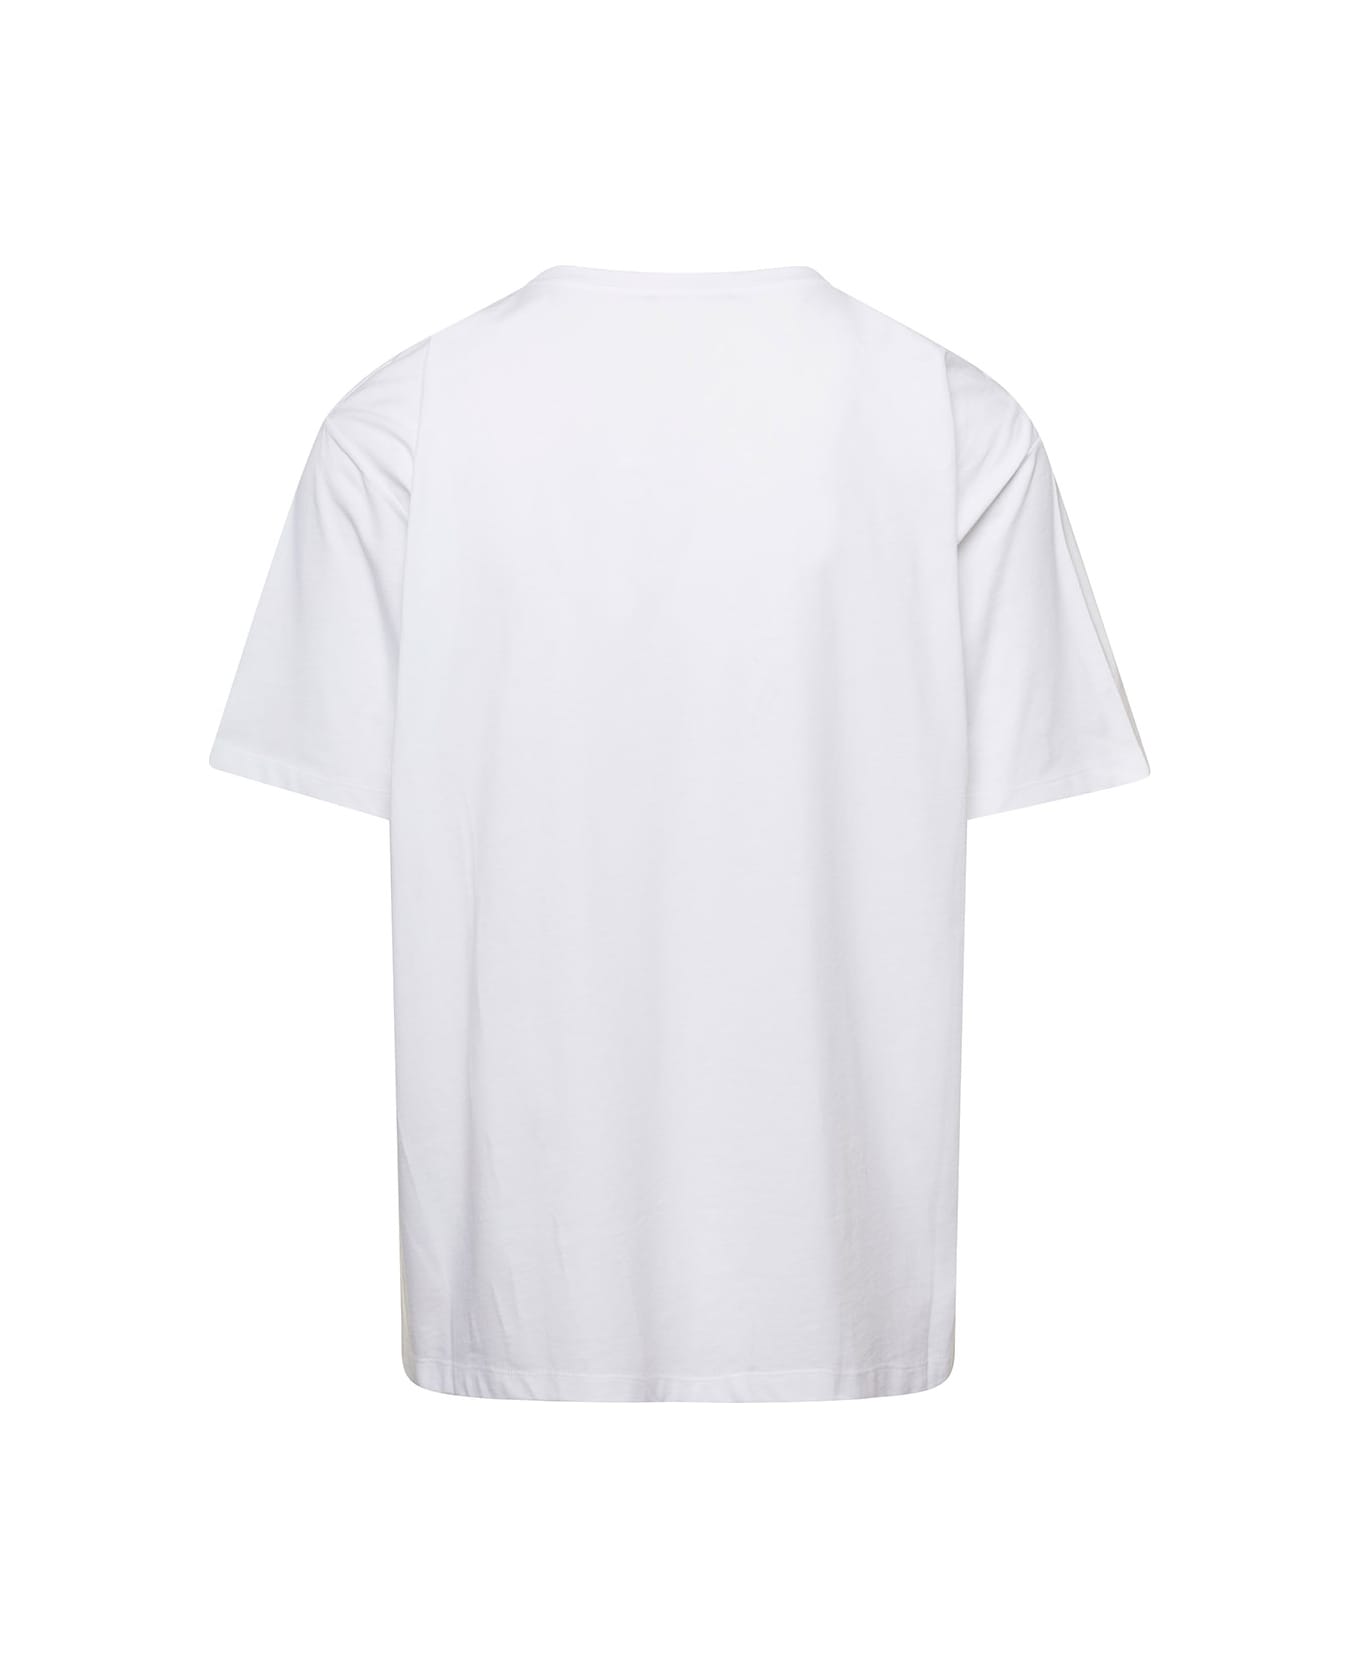 Balmain White Crewneck T-shirt With Contrasting Logo Lettering Print In Cotton Man - White